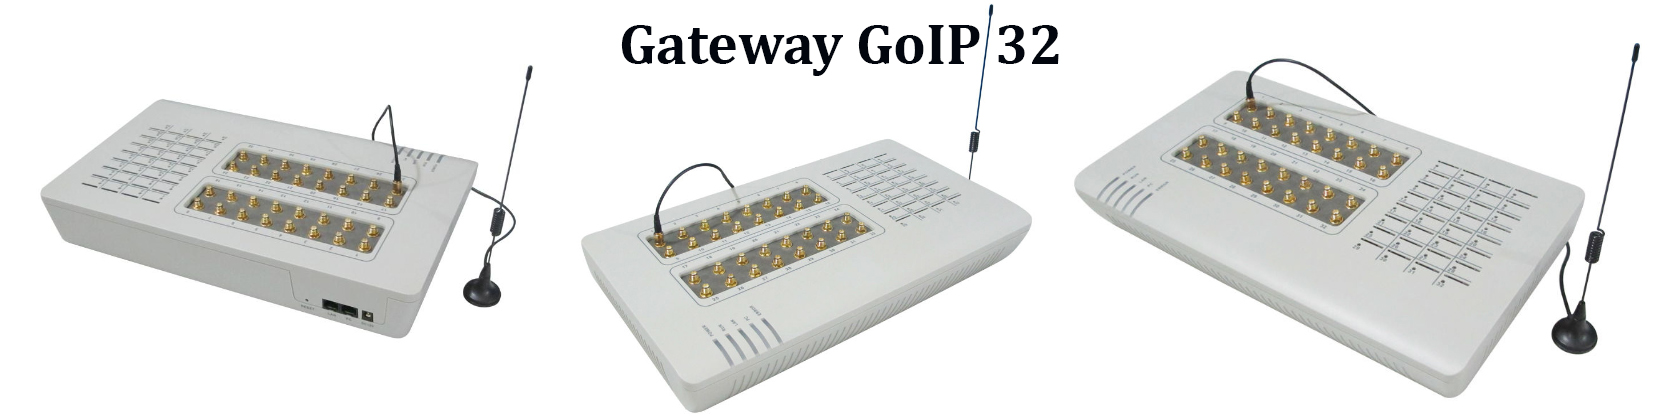 Gateway goip 32 là gì